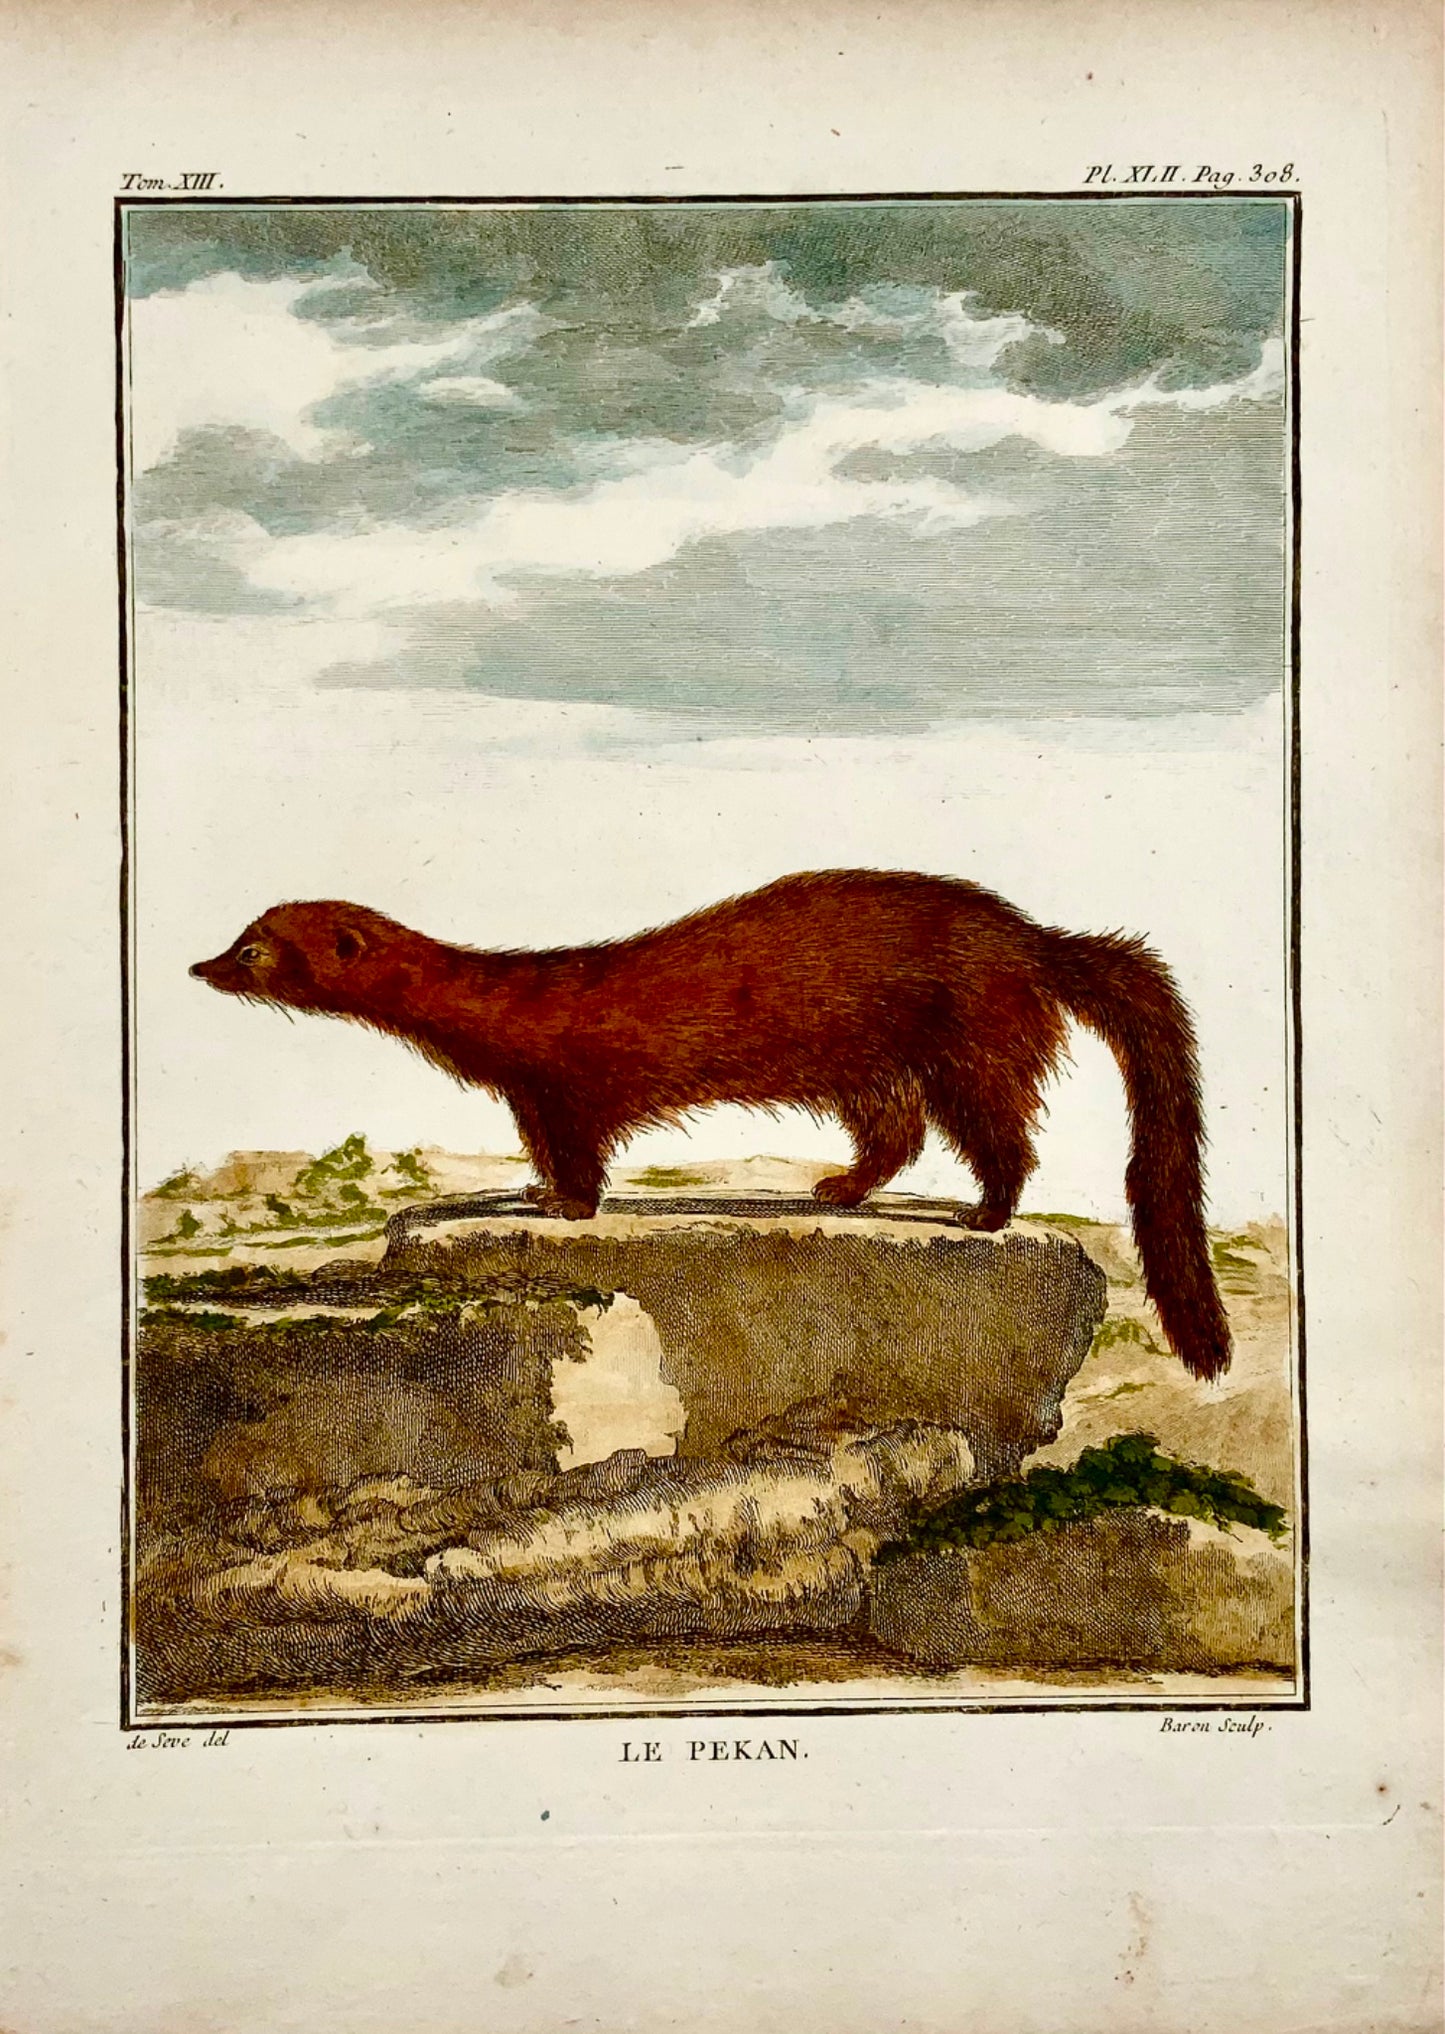 1766 De Seve - FISHER - Large QUARTO edition hand colored engraving - Mammal